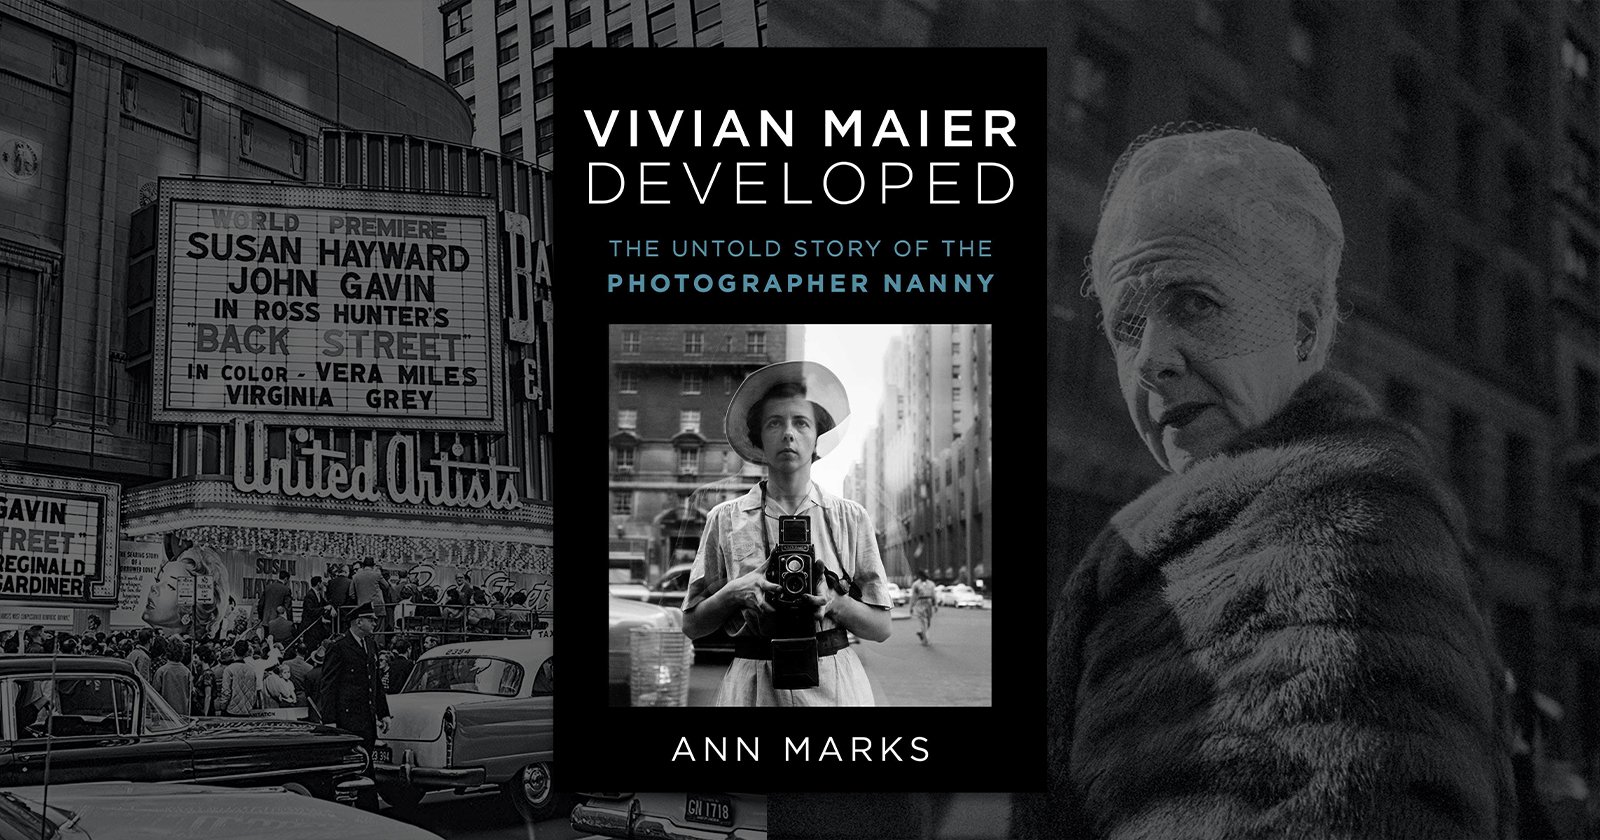 Vivian Maier's biography book